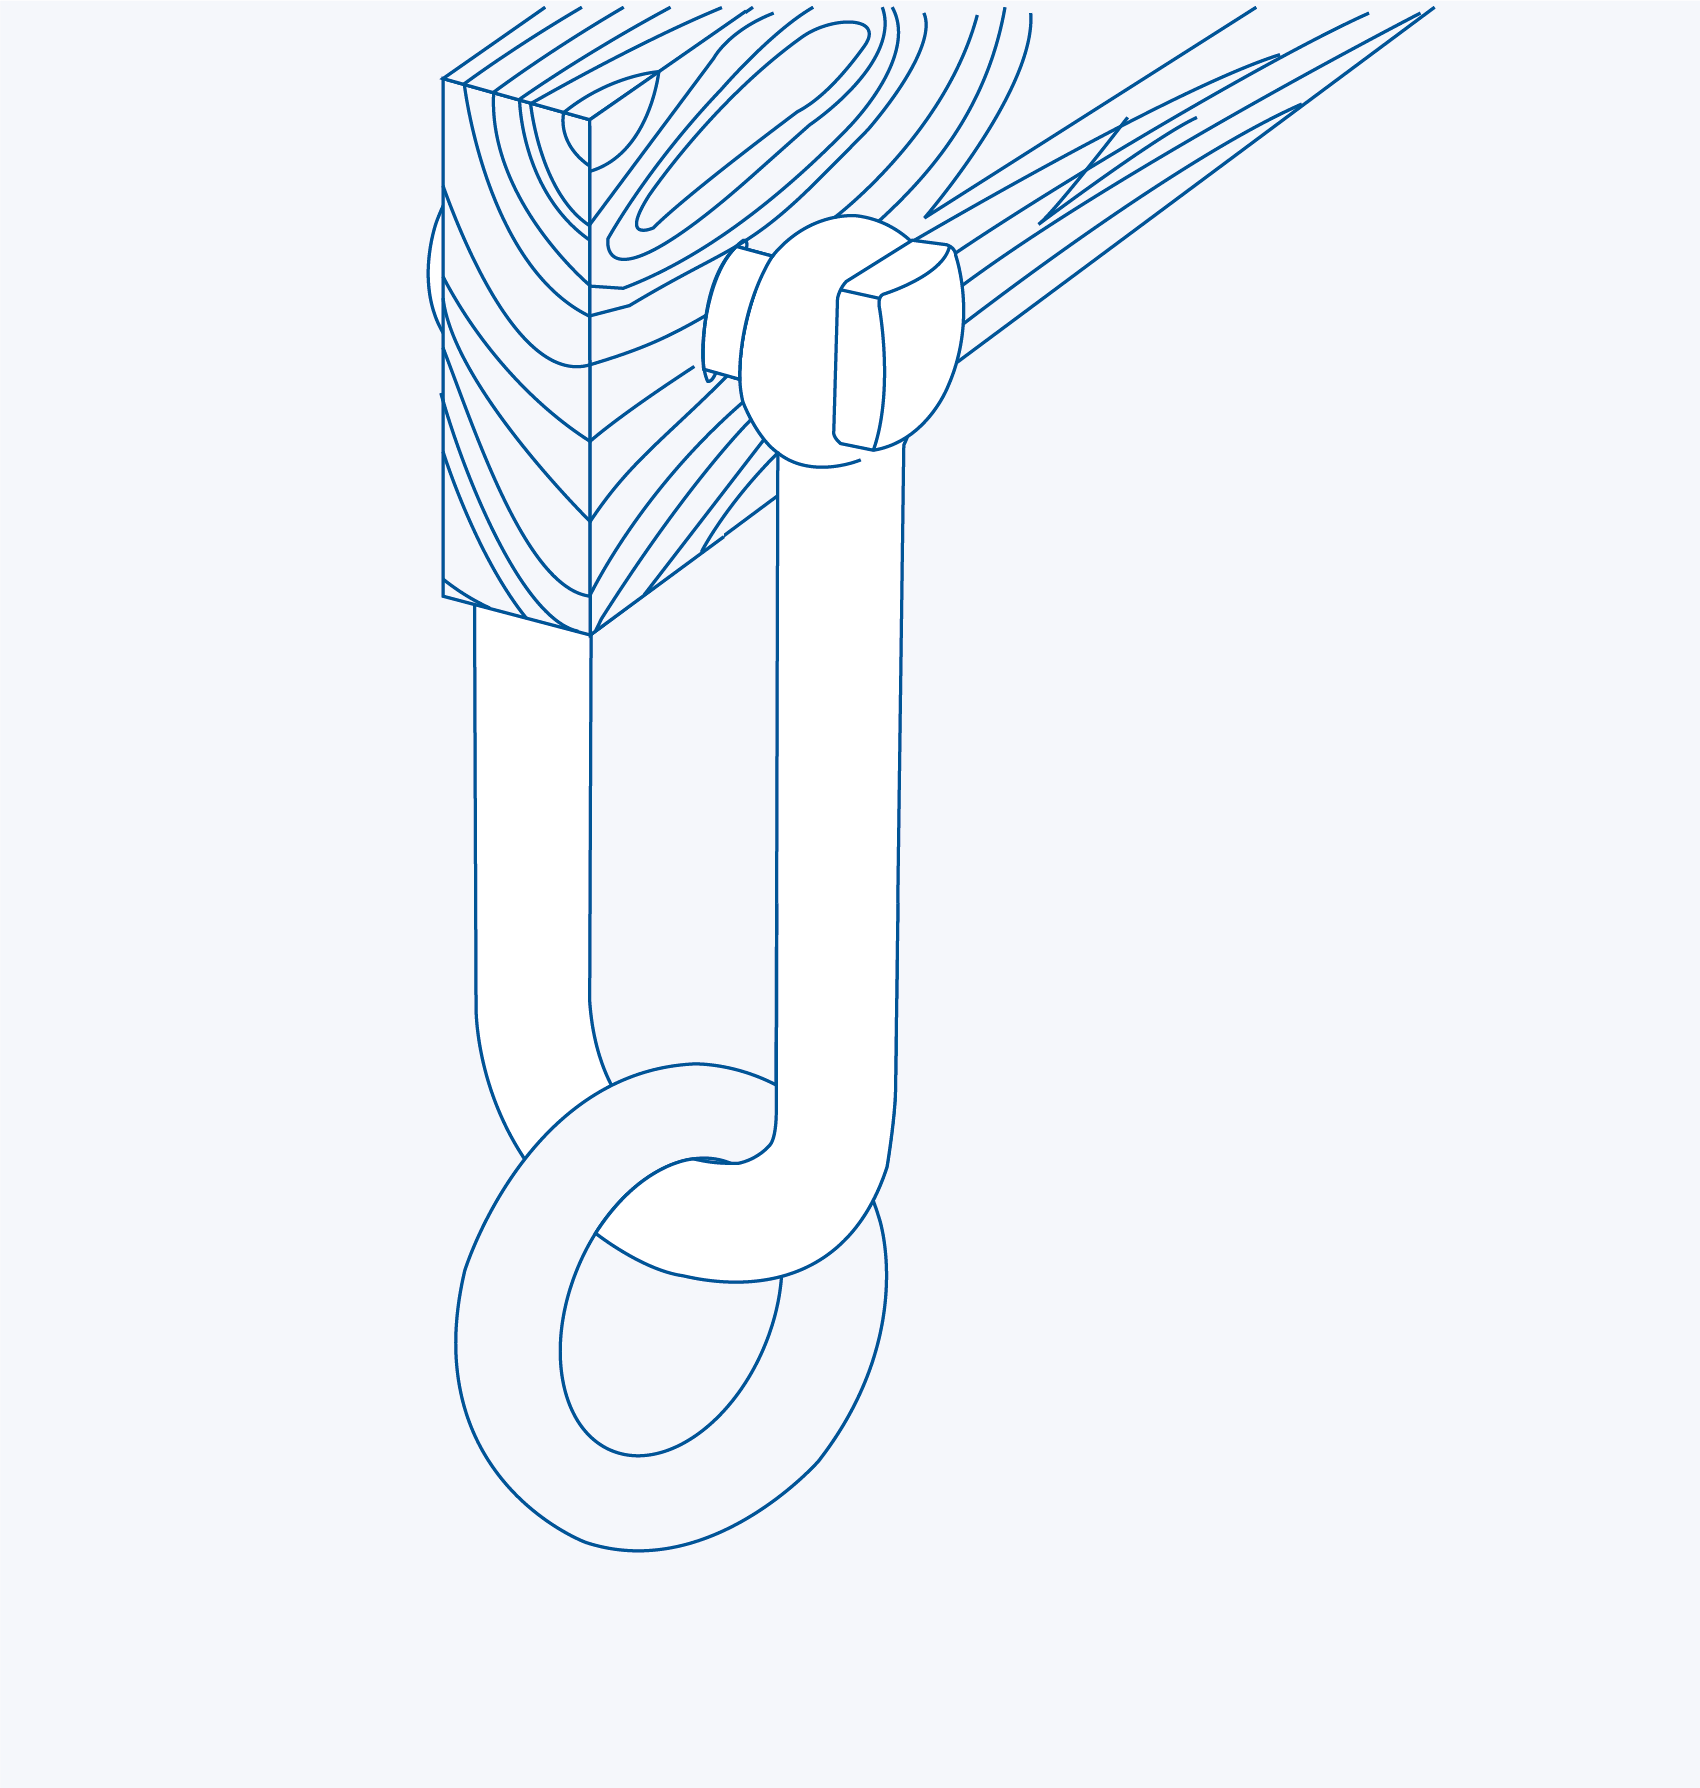 S362B Long D-shackle (square head pin) - 316